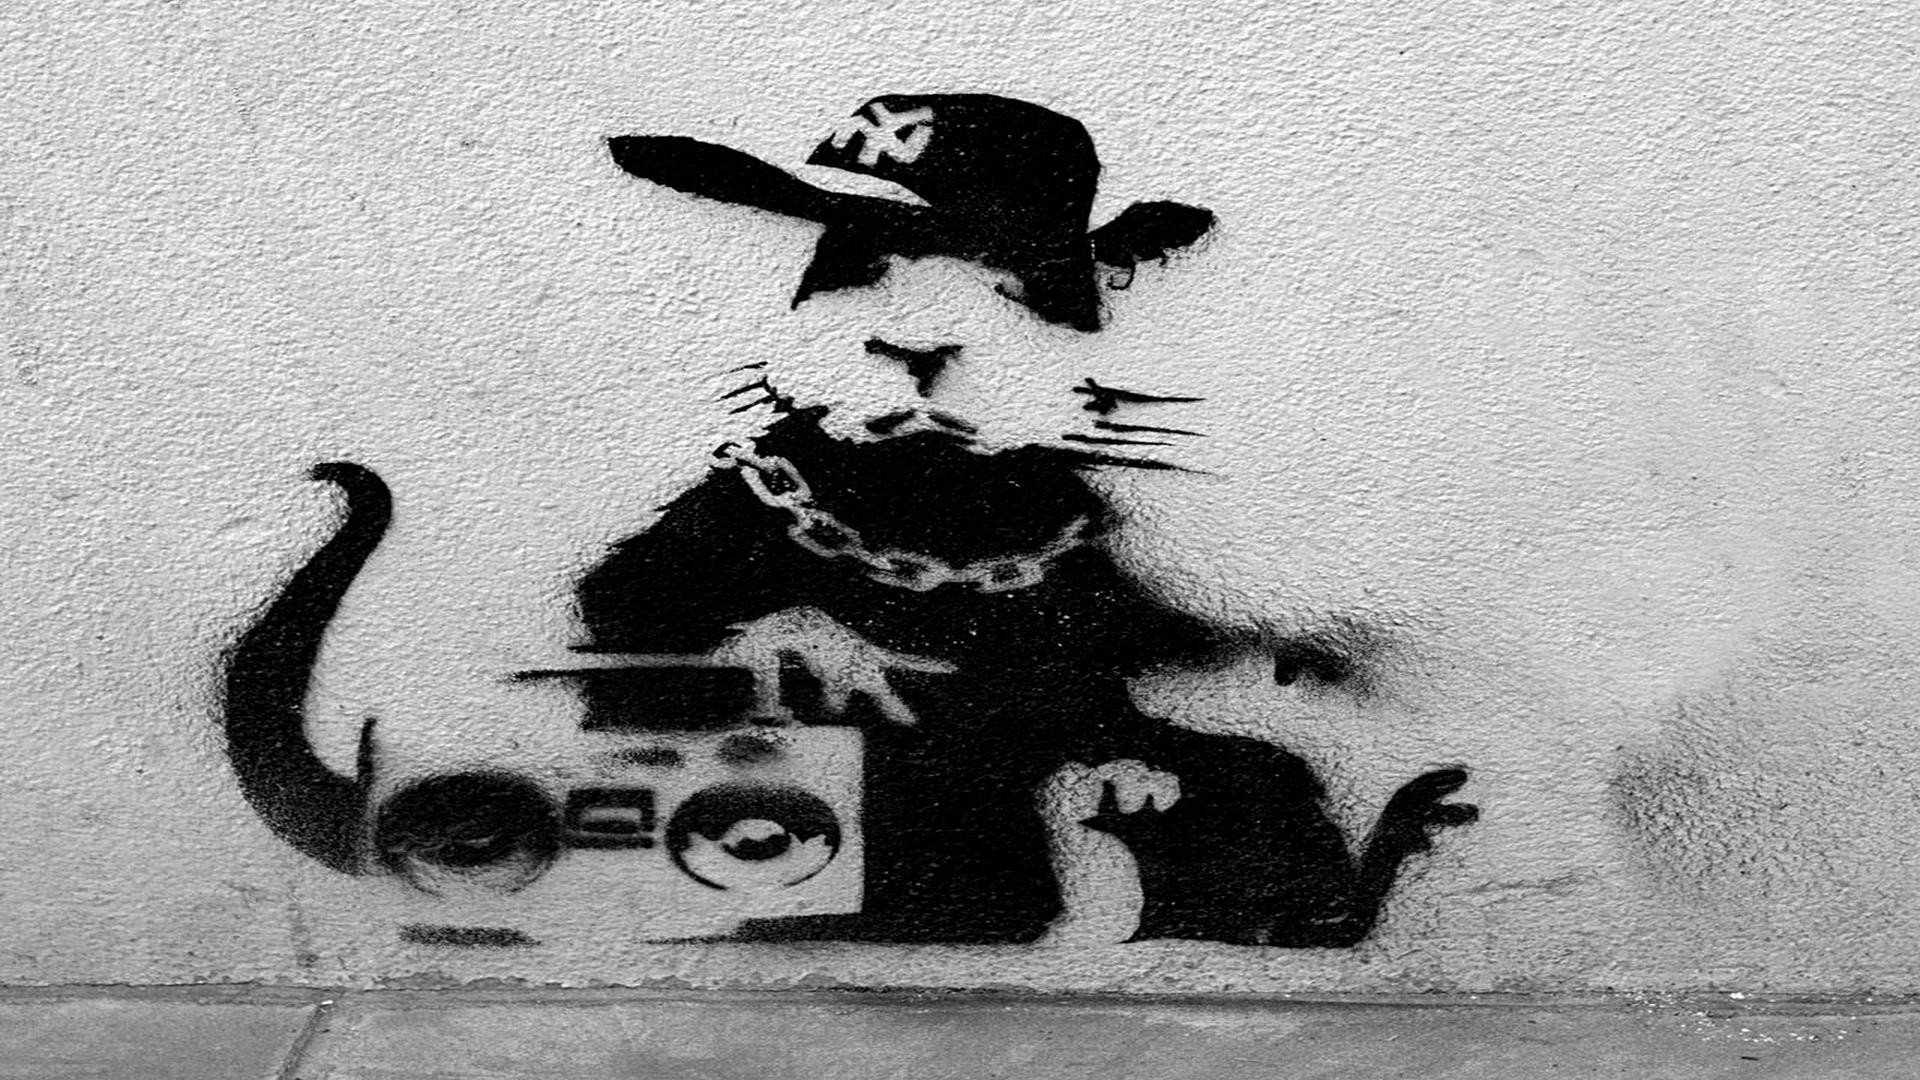 Wallpaper.wiki Banksy Art Bakcground Full HD PIC